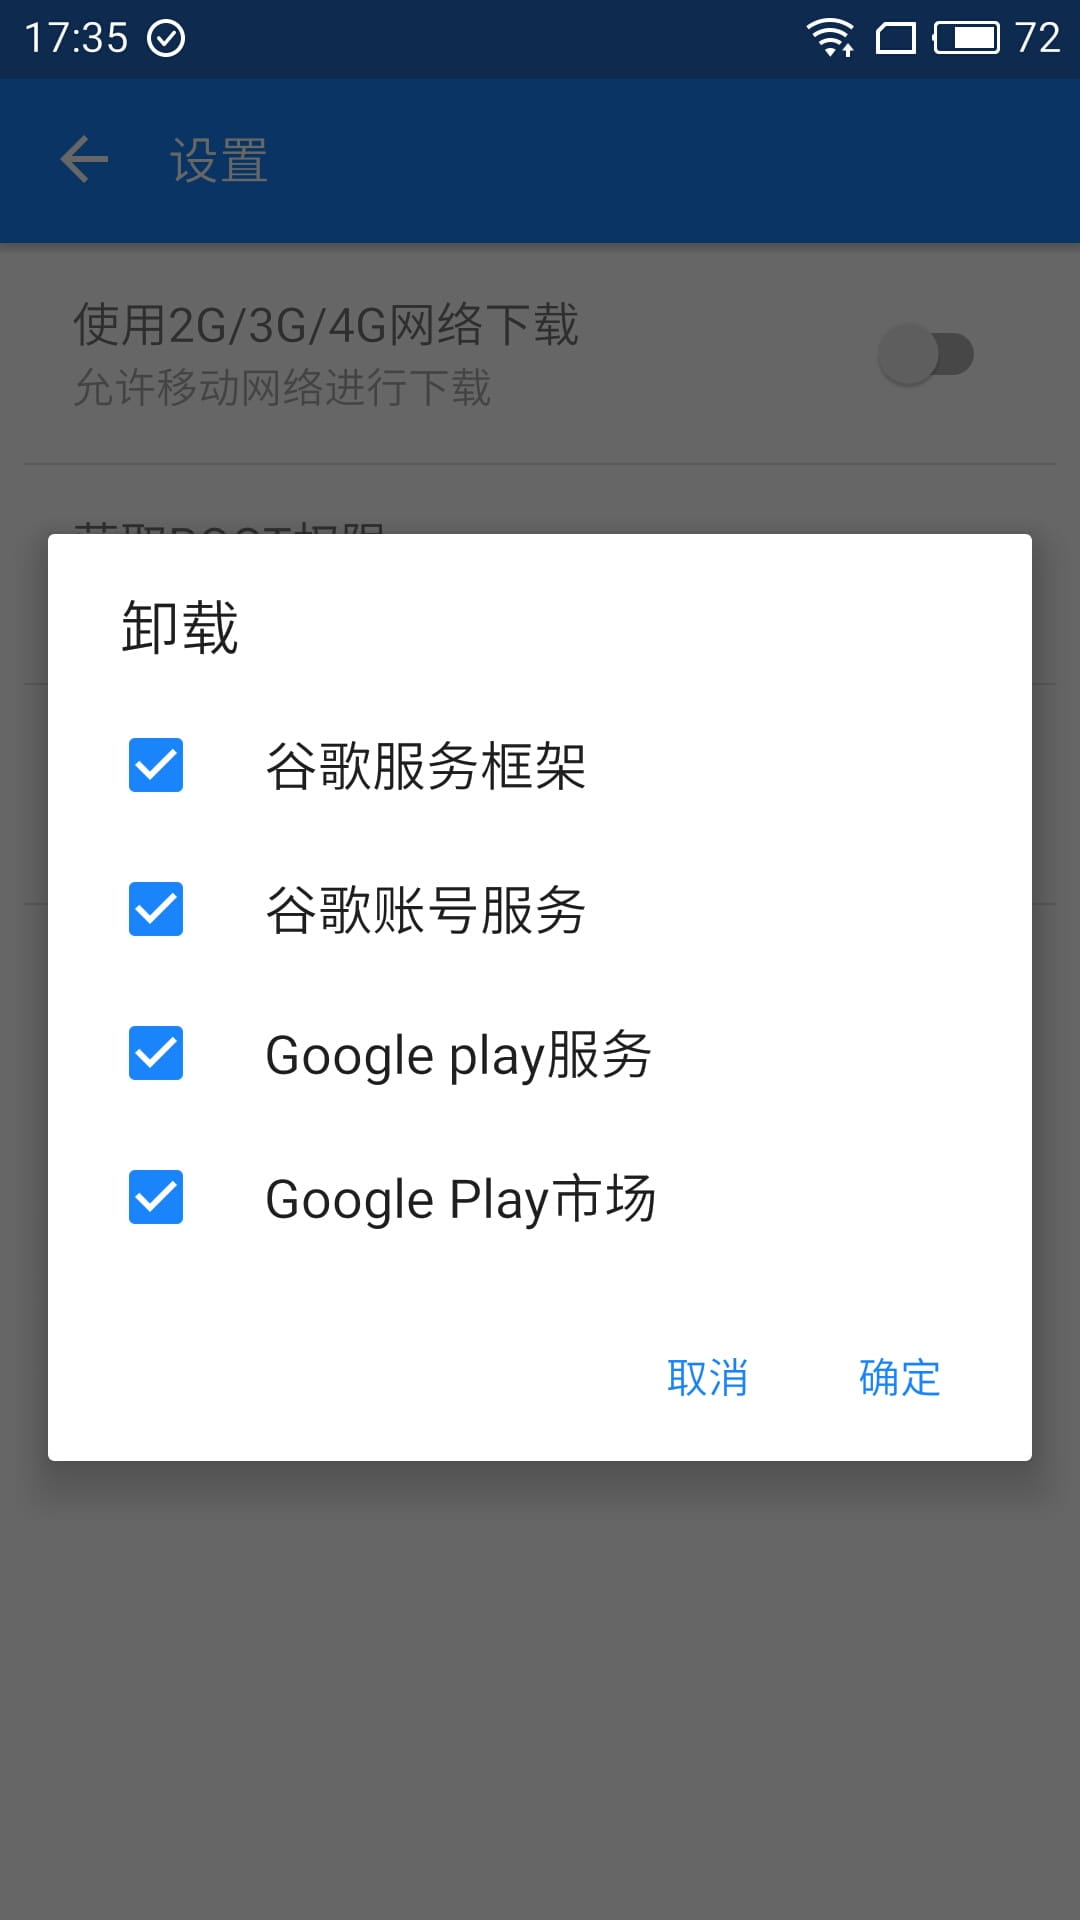 GO谷歌安装器三件套官网版 v4.8.6截图